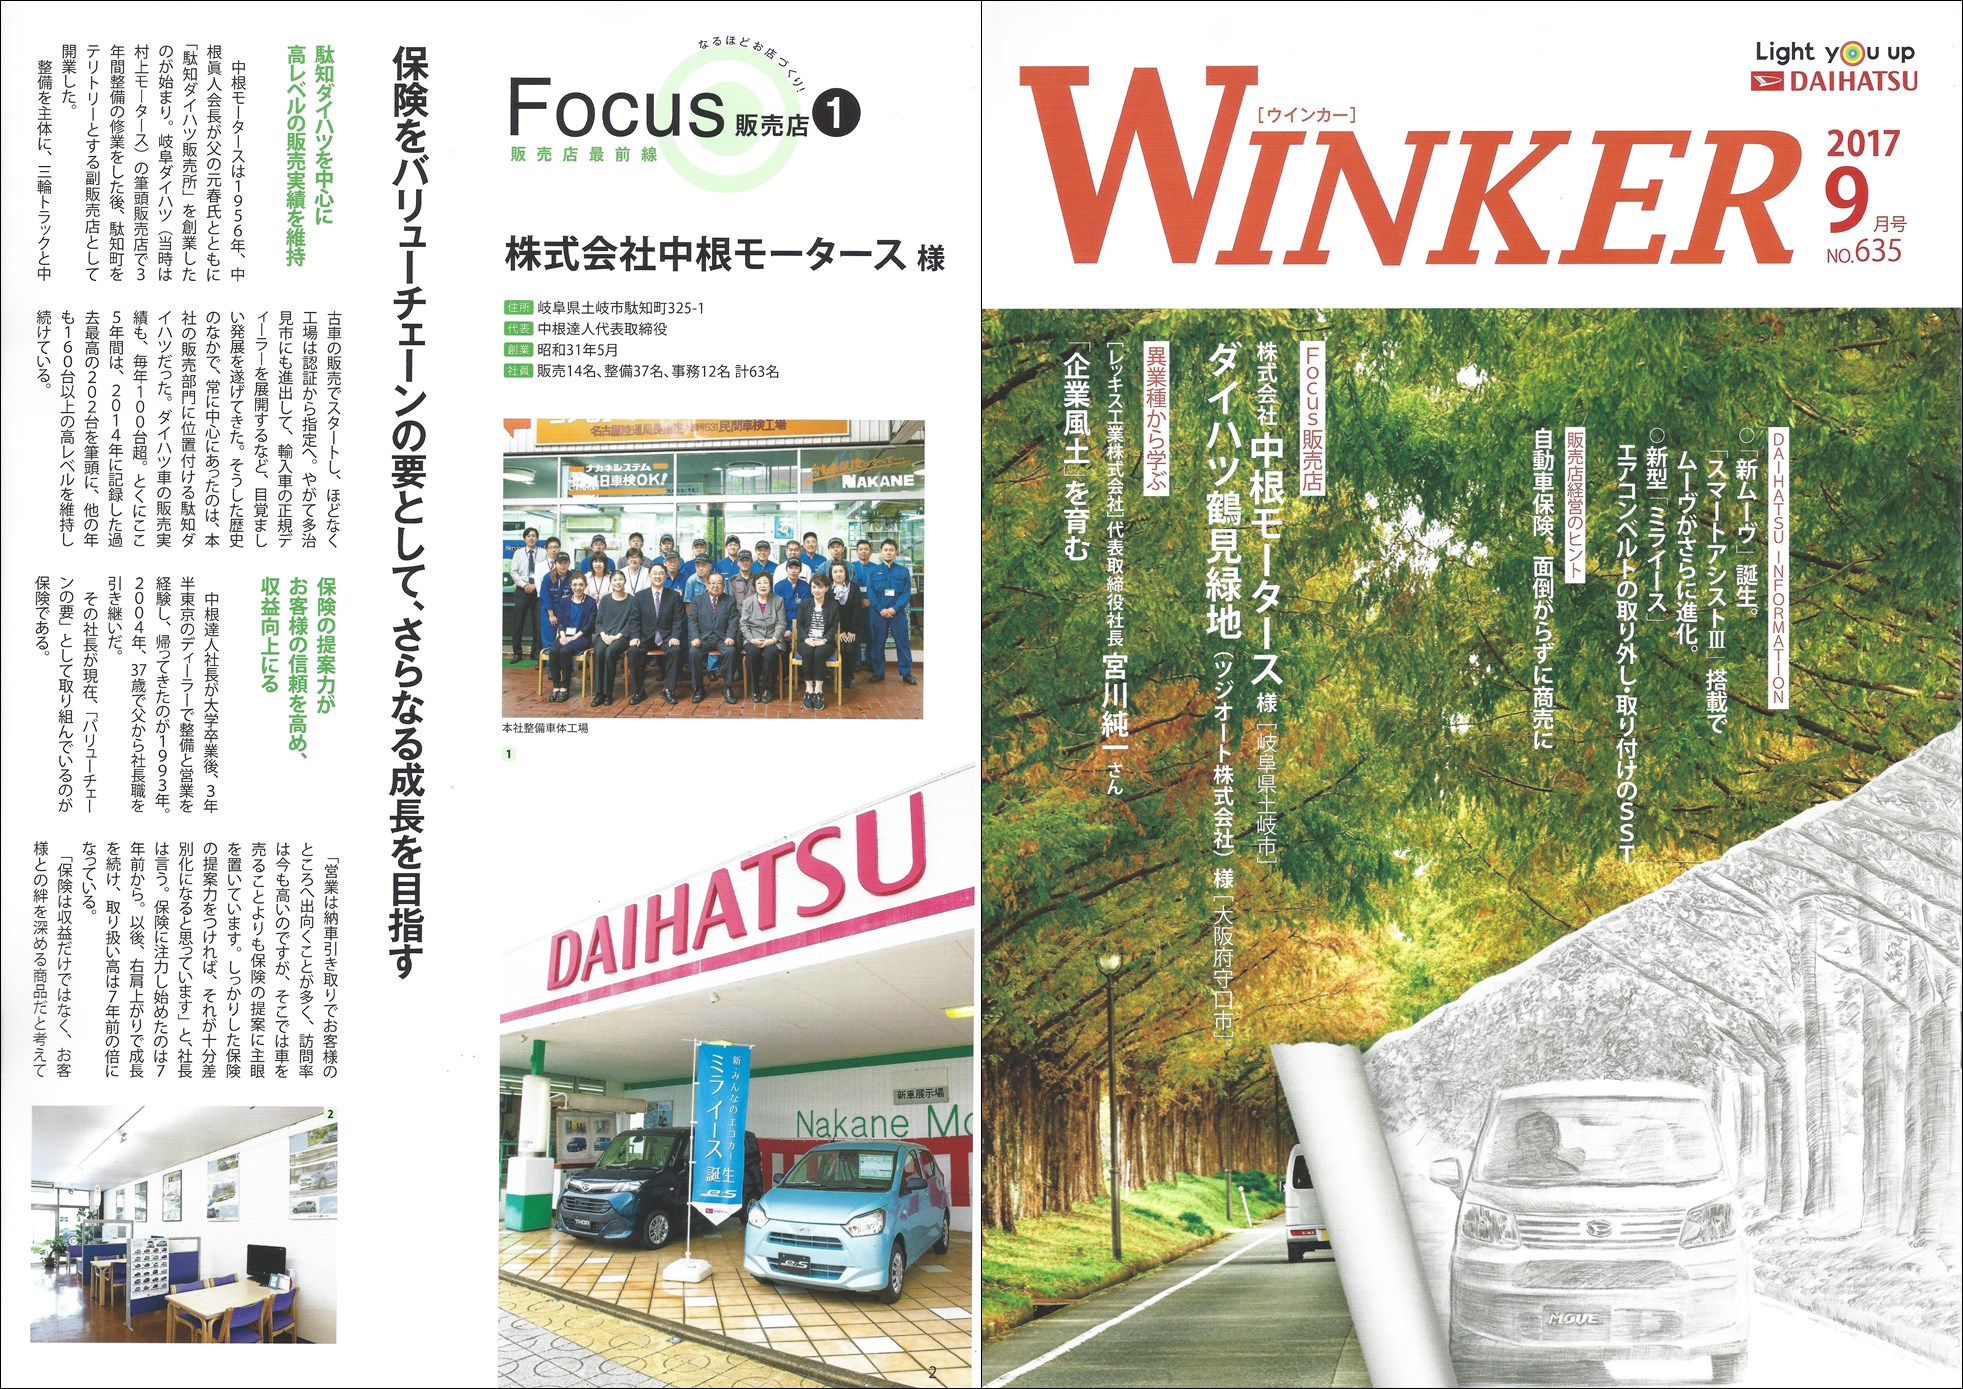 http://nakanemotors.com/blog/dachi-daihatsu/winker1.jpg